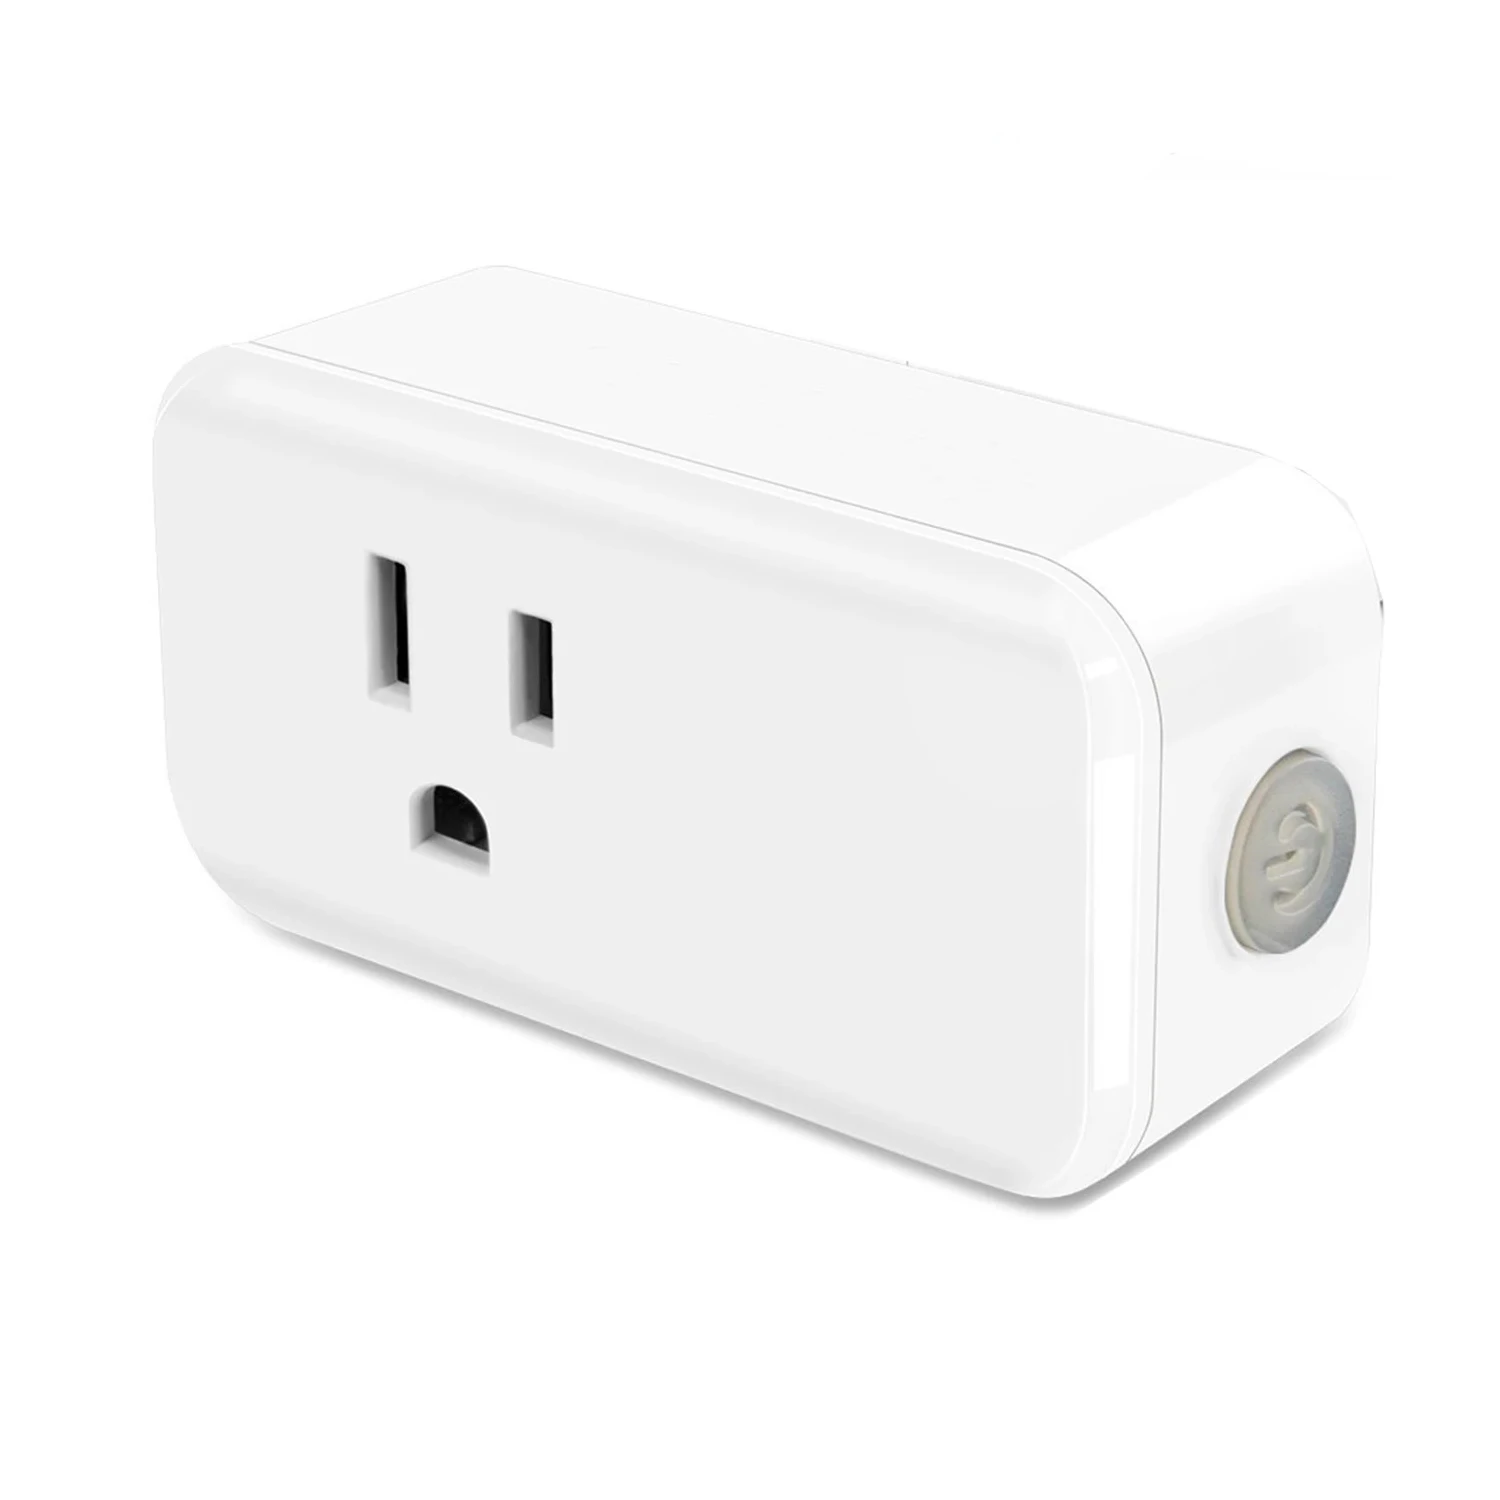 Wifi Smart Power Plug Adaptors Electrical Wall Socket Mini inteligente US Outlet Wireless Remote Control by Alexa Google Home